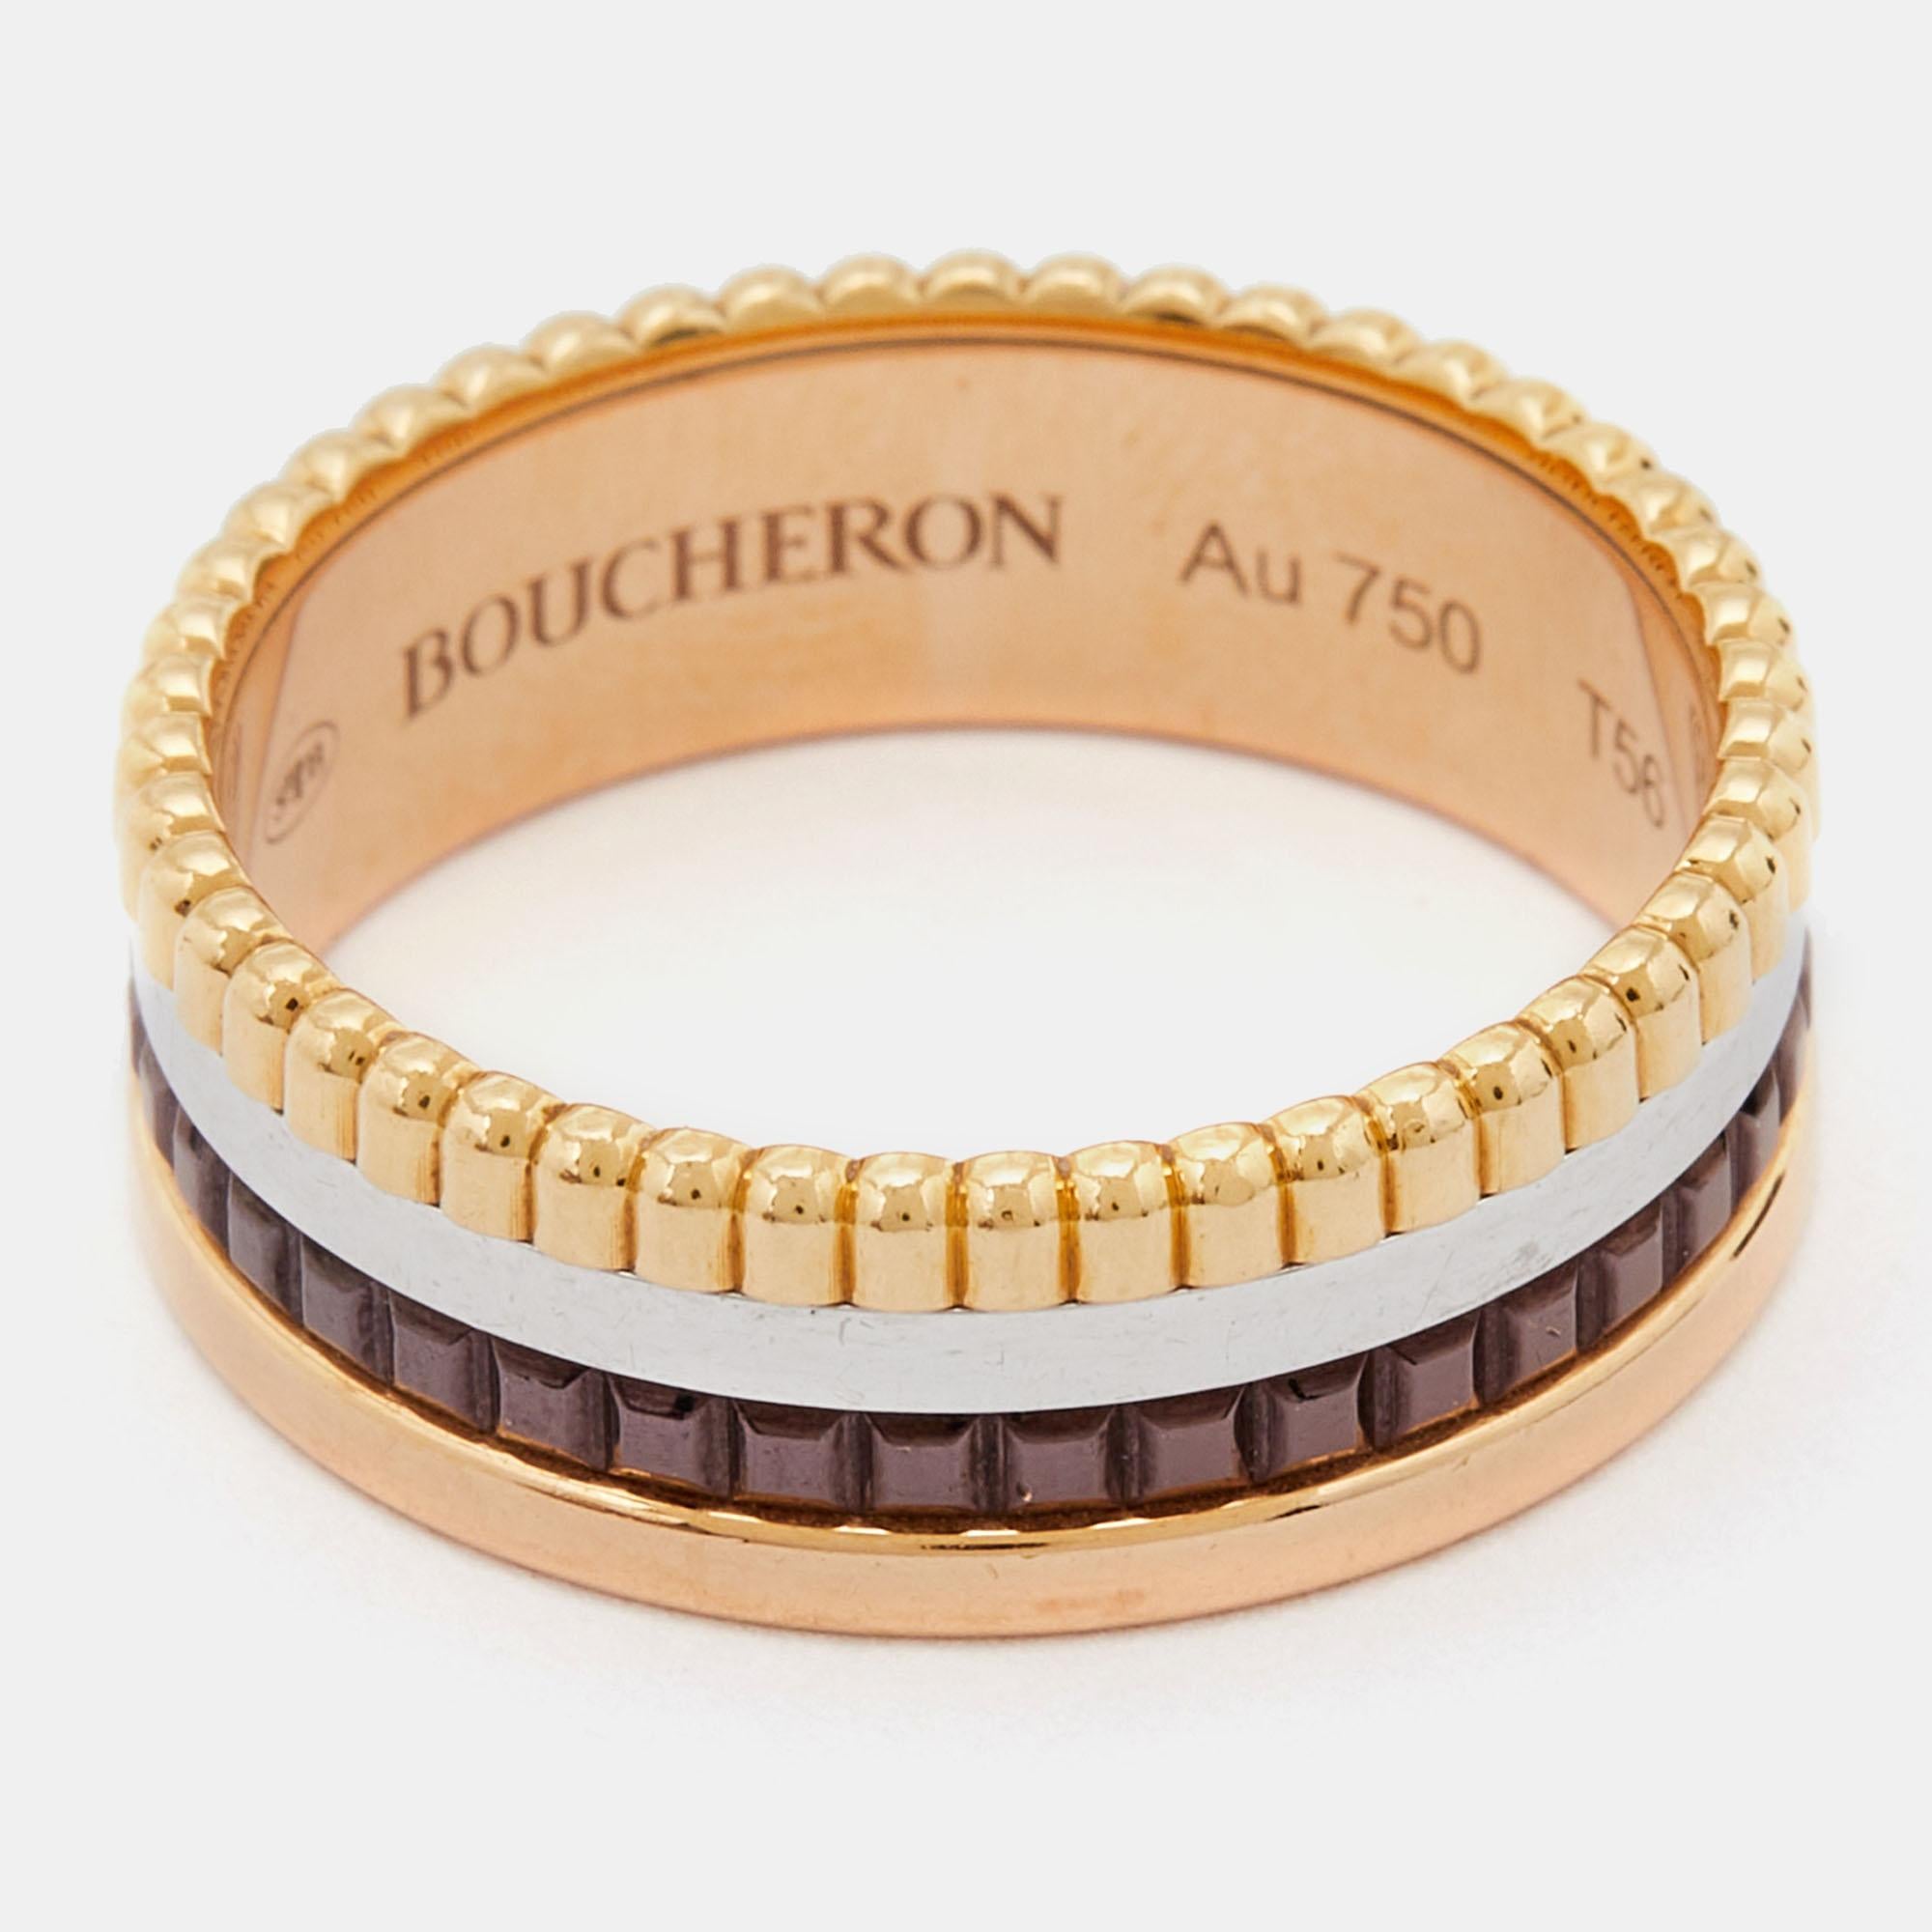 boucheron ring